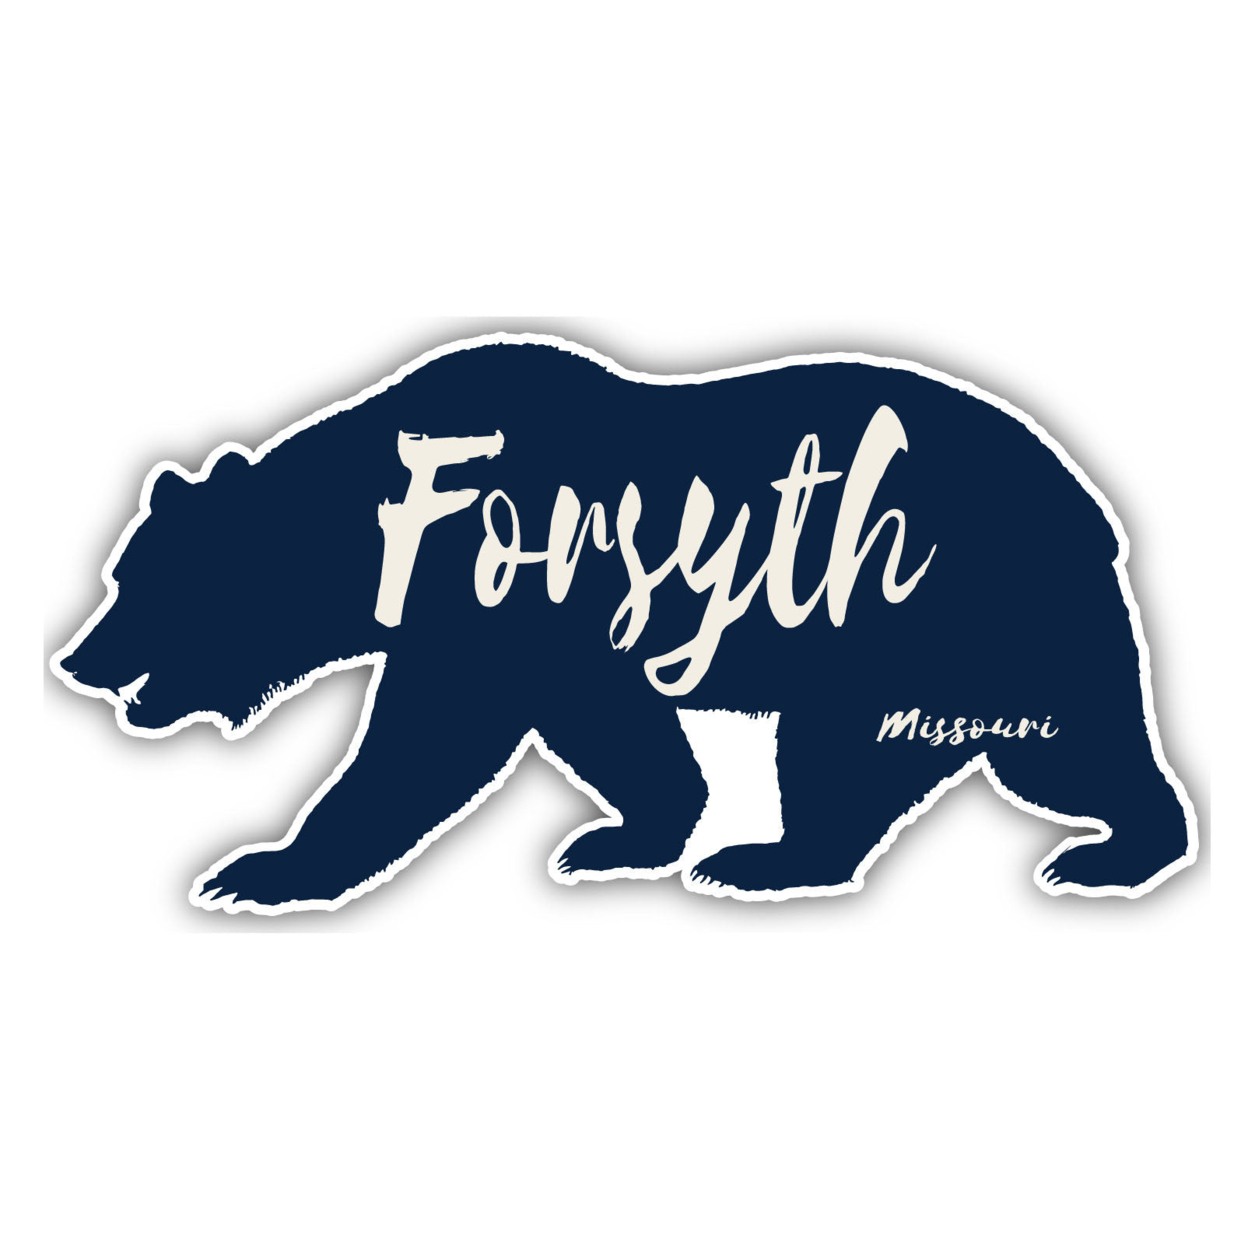 Forsyth Missouri Souvenir Decorative Stickers (Choose Theme And Size) - 4-Pack, 2-Inch, Bear